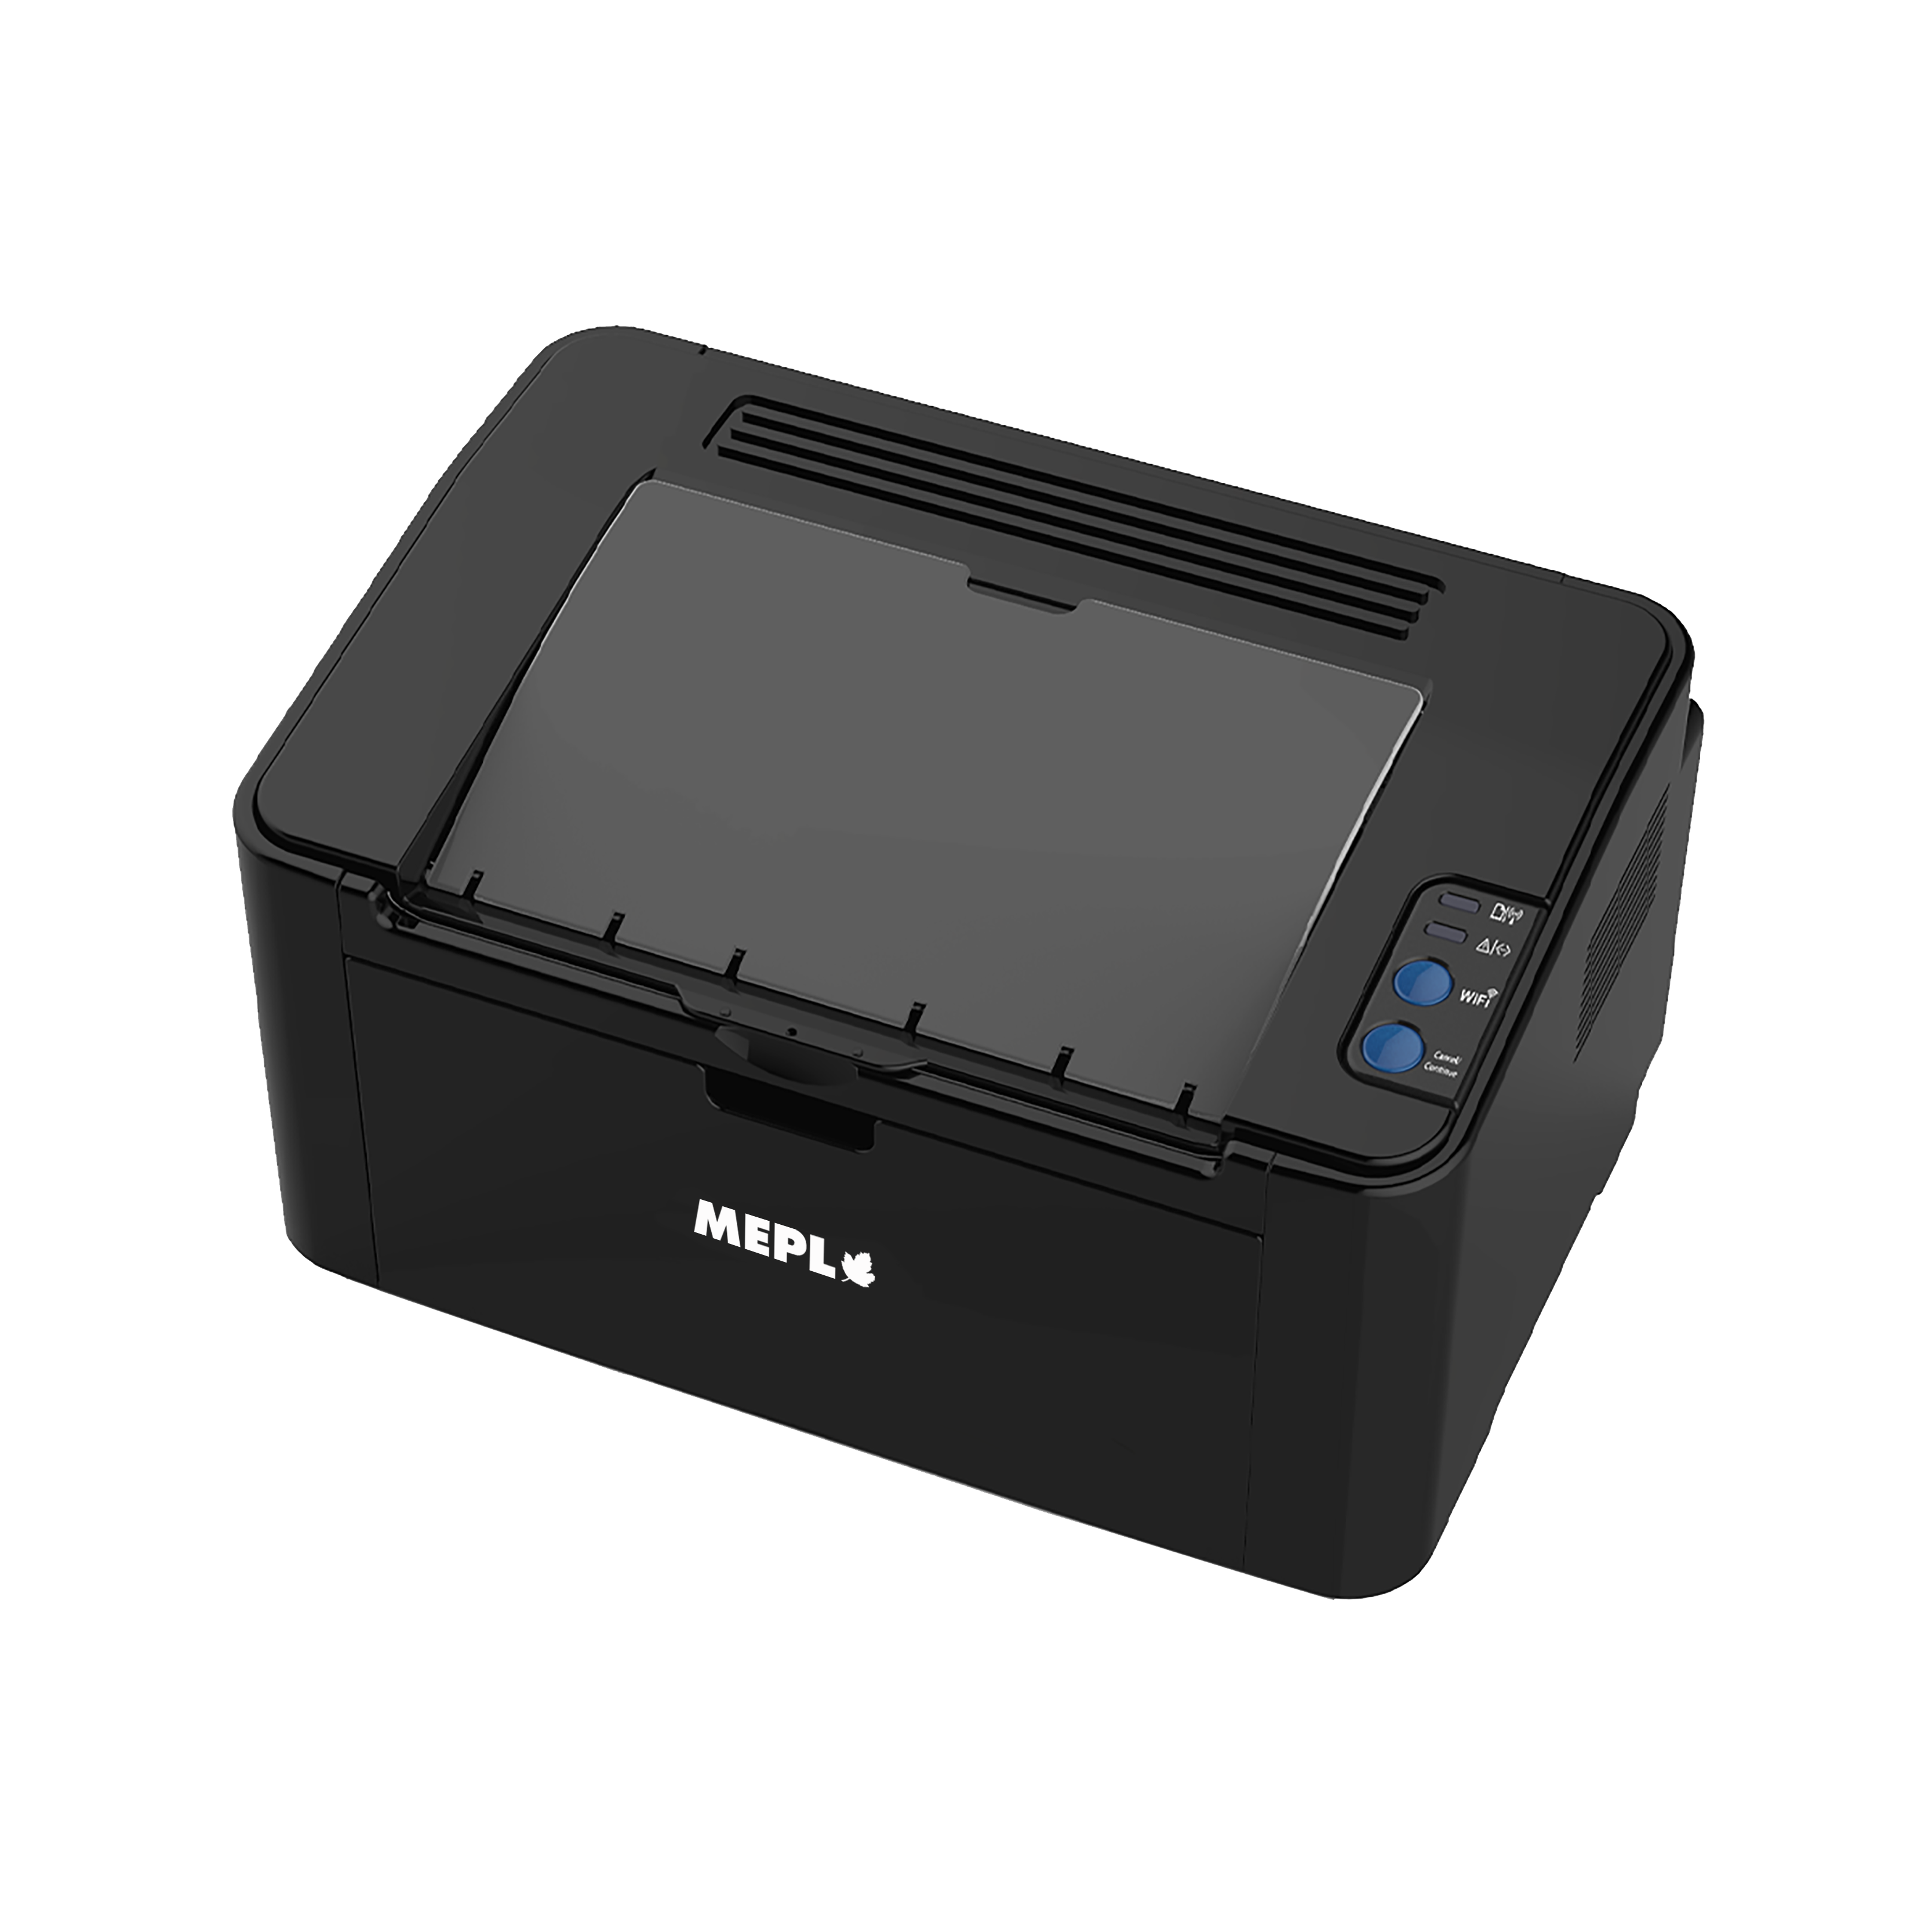 MEPL Multifunction Printer MP2503